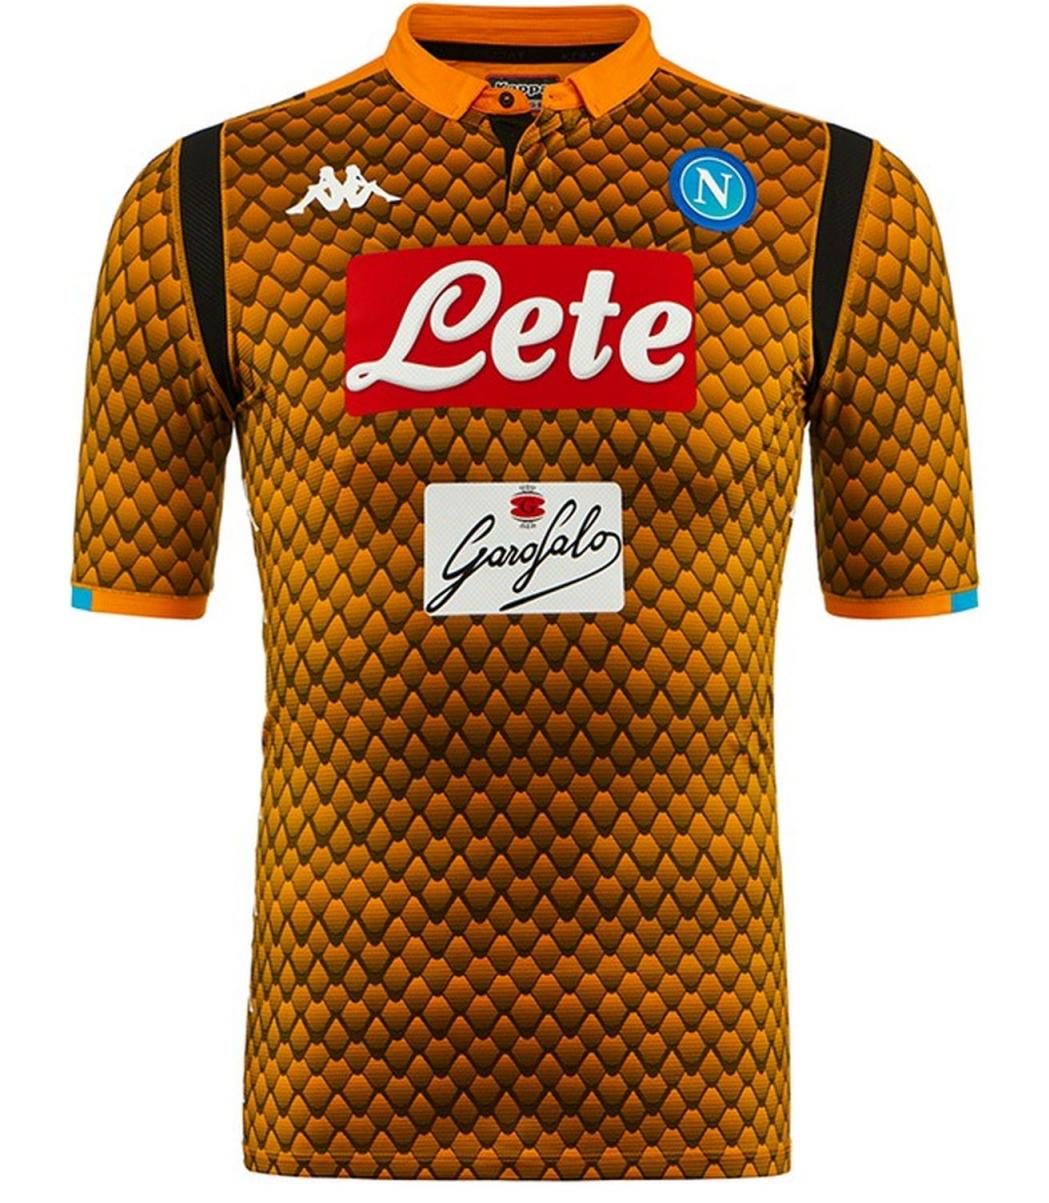 Napoli 2018-19 Home & Goalkeeper Kits